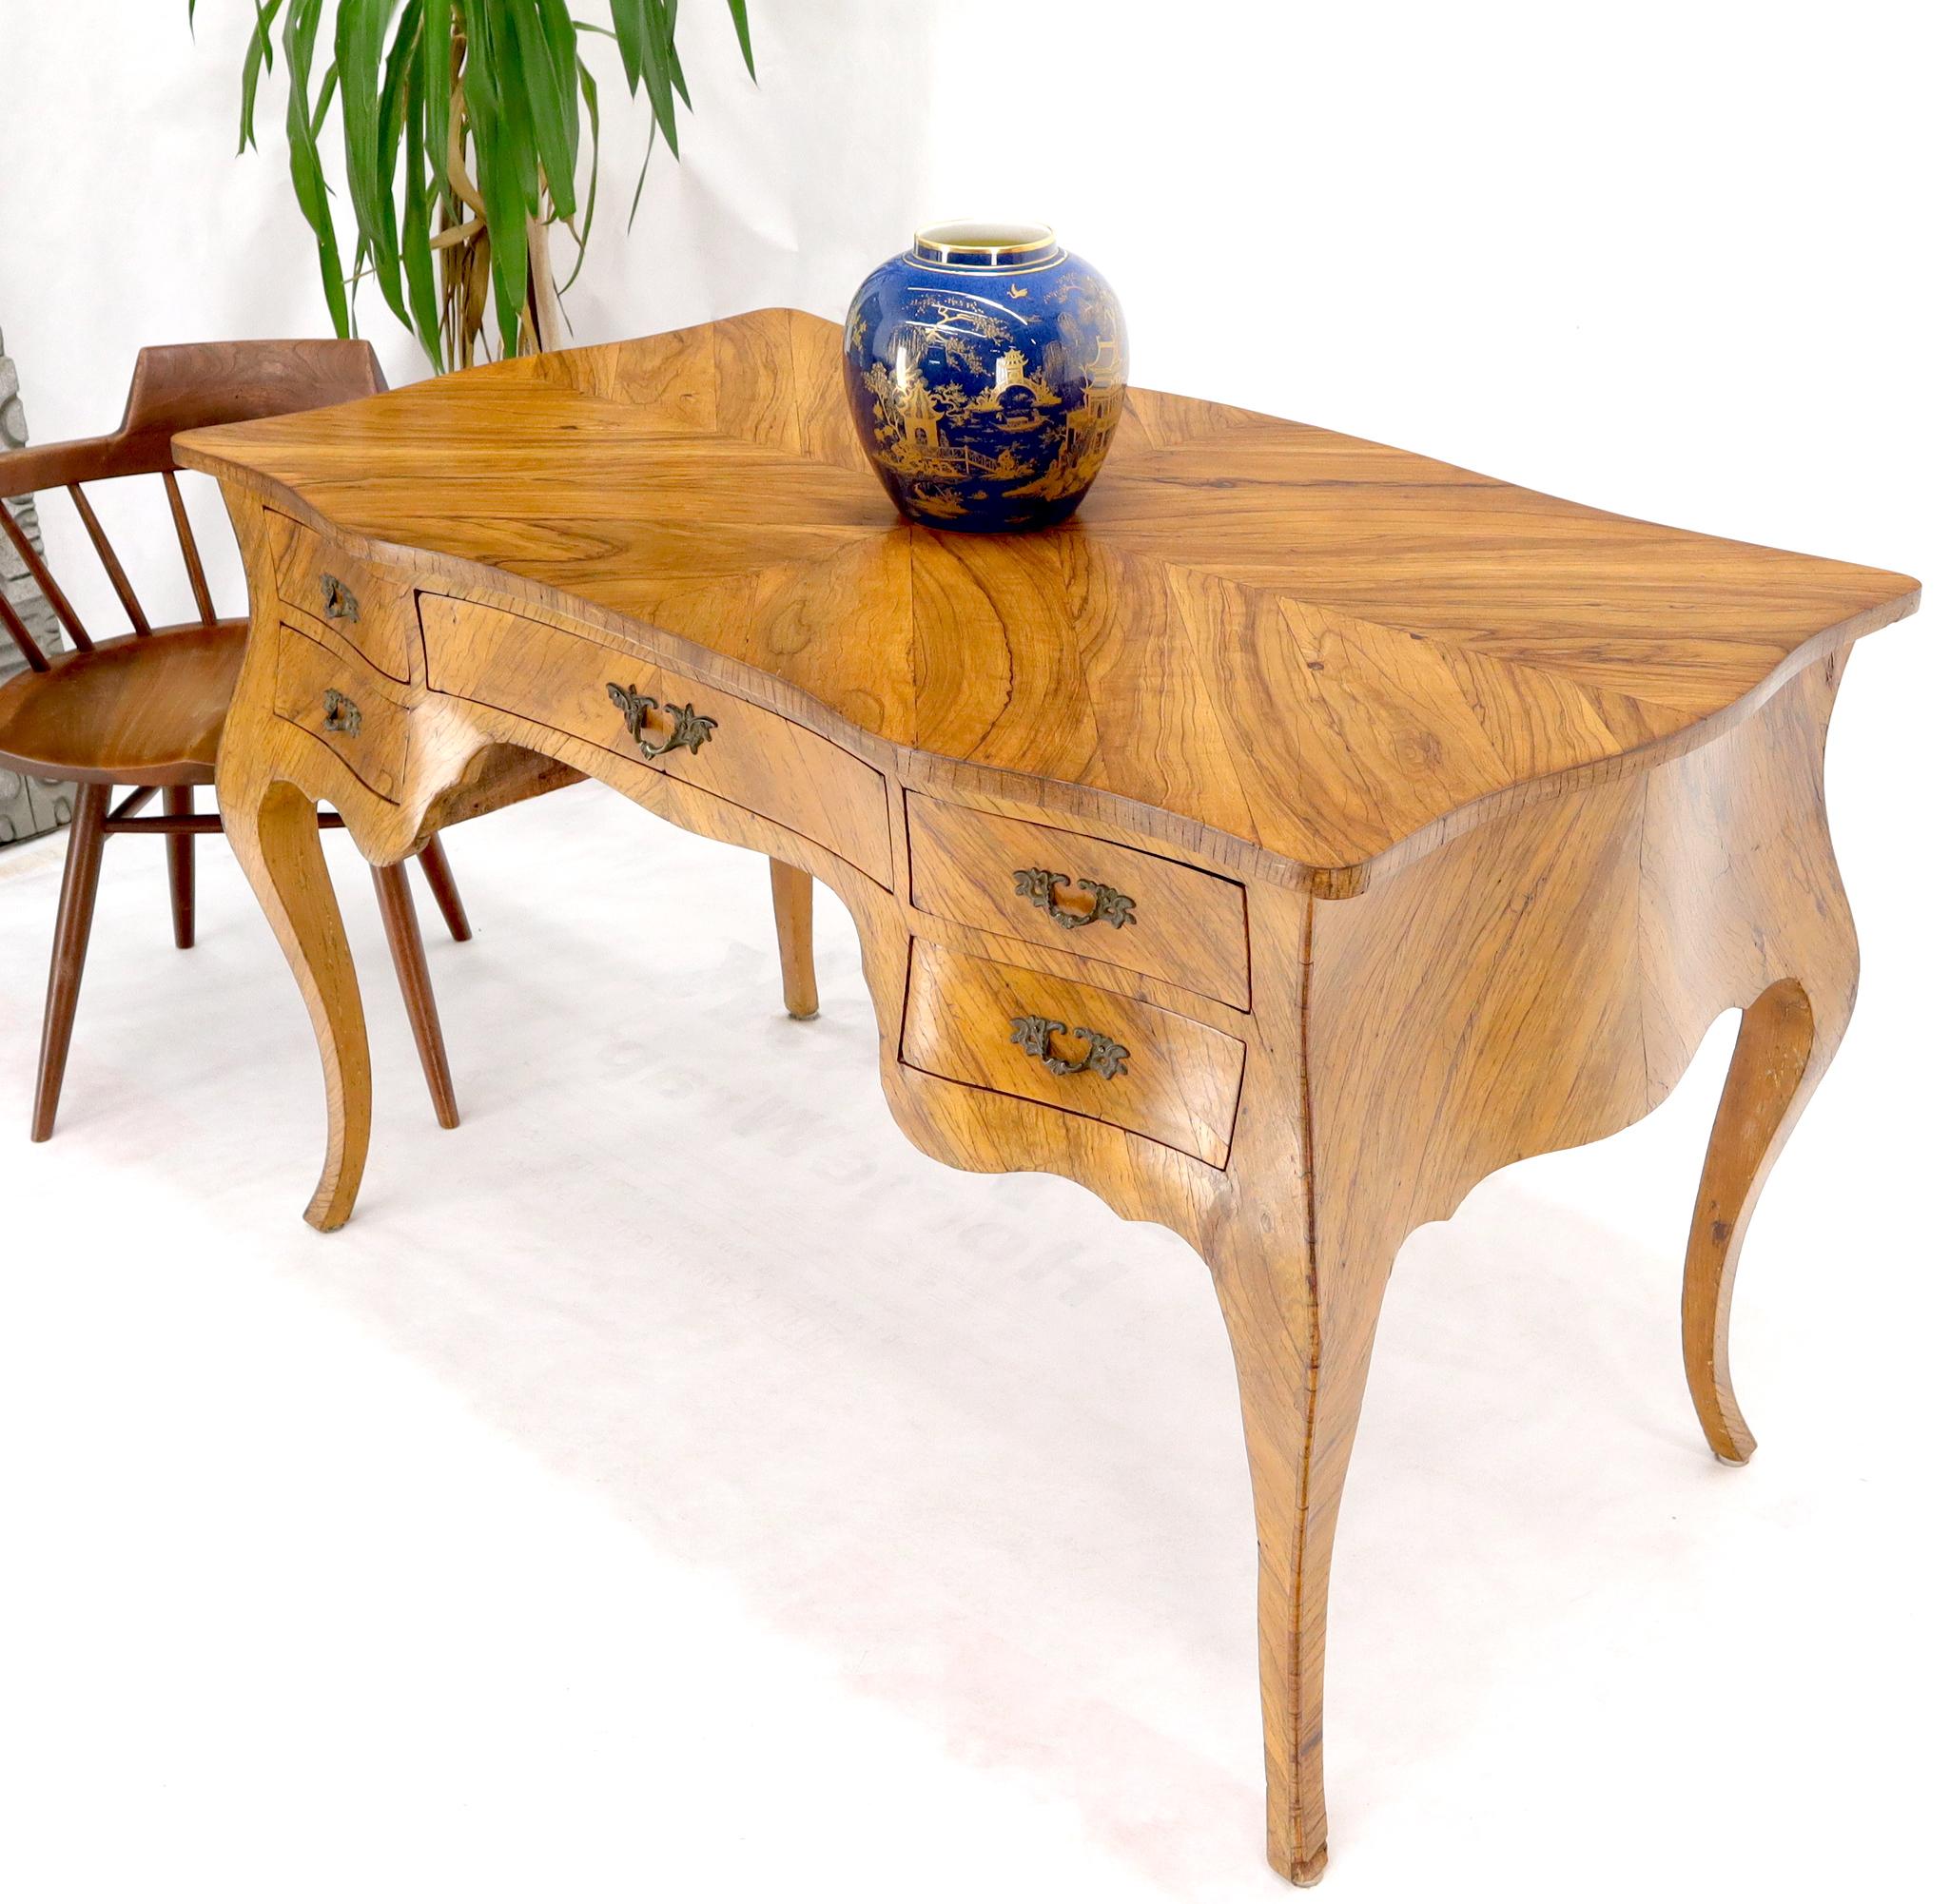 olive wood furniture